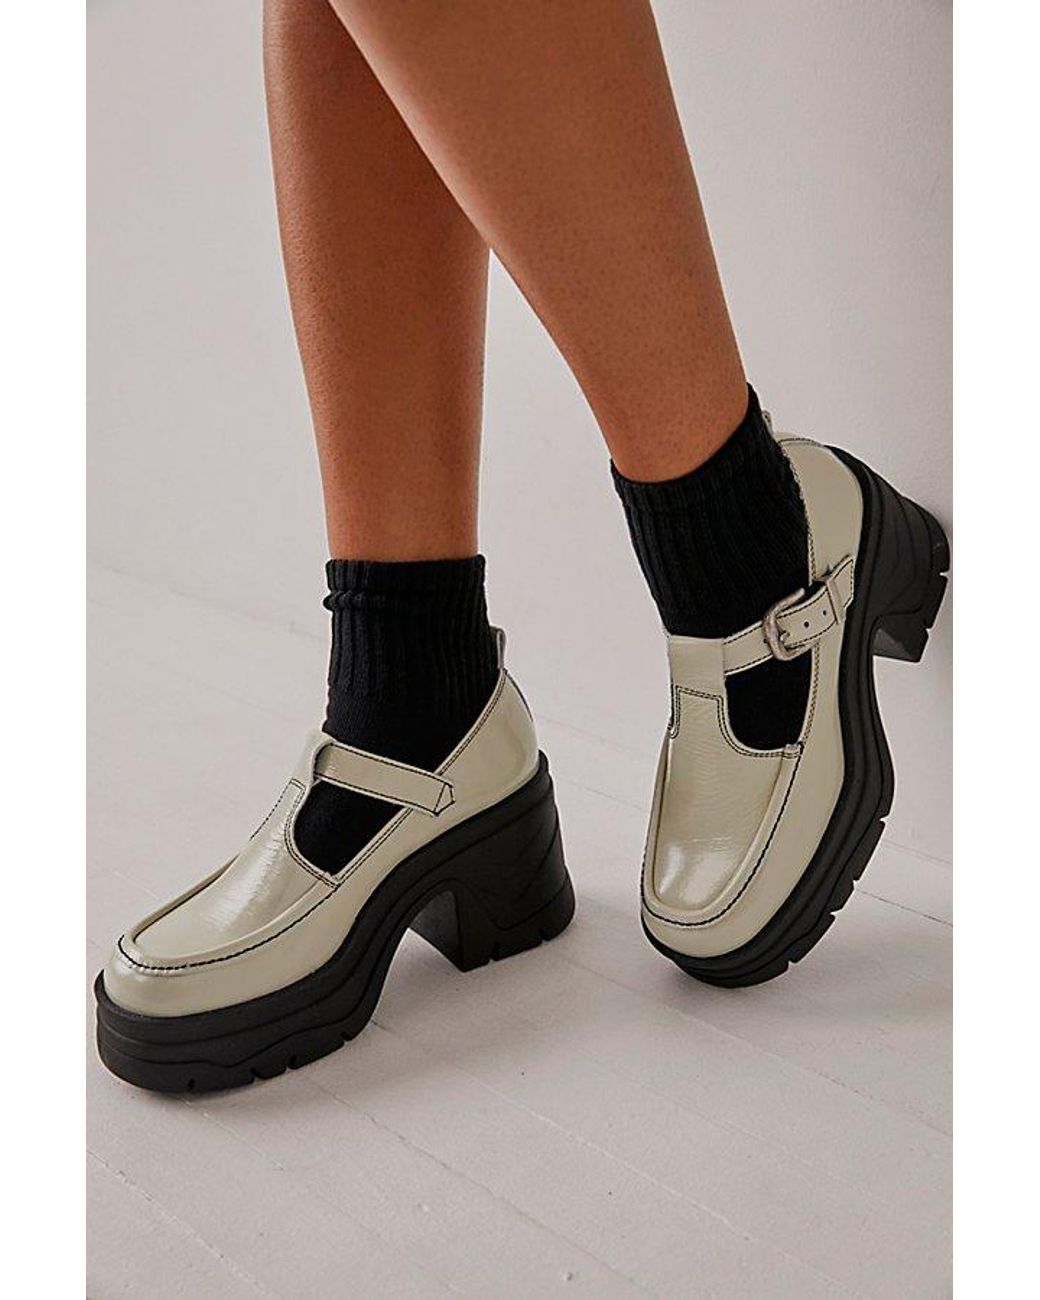 Koi Ambrosia Mary Jane Heeled Shoes | Urban Outfitters Turkey